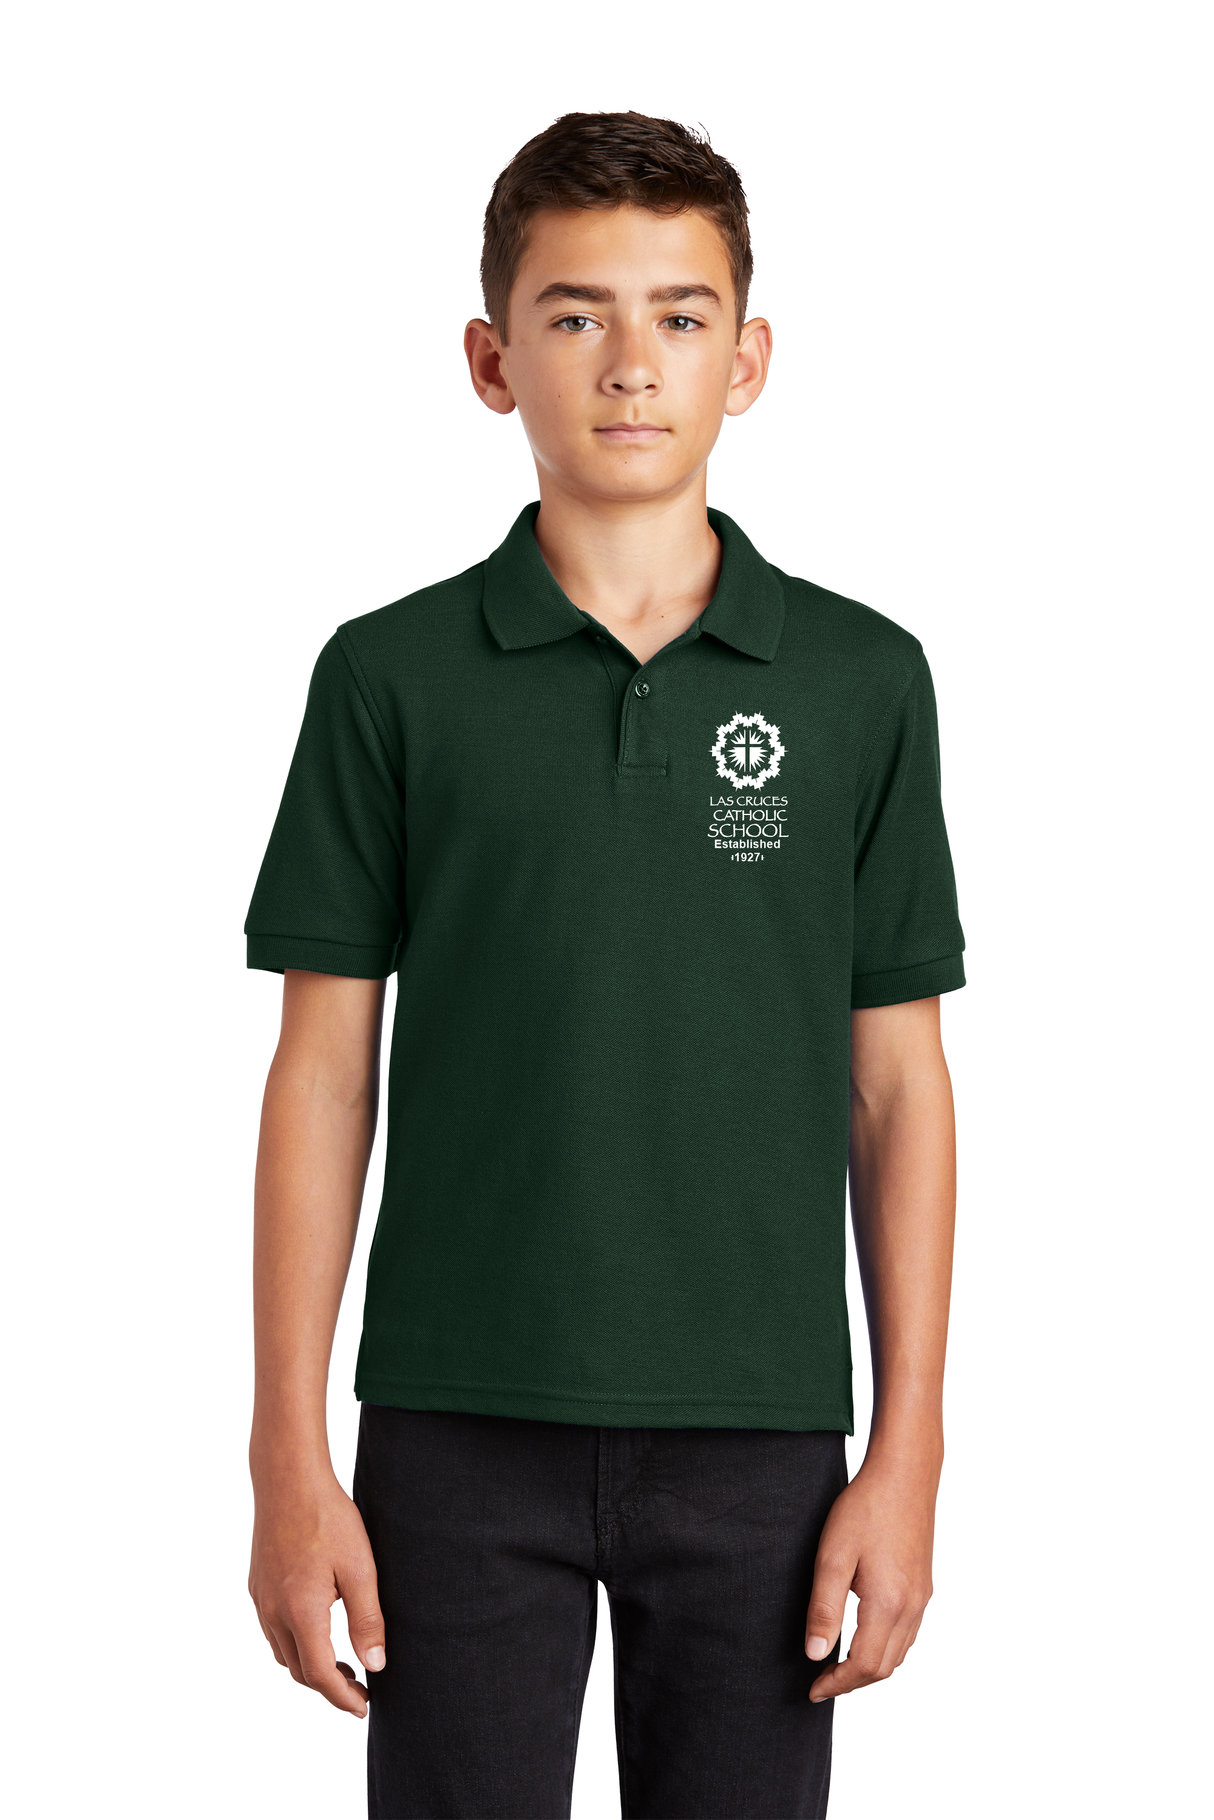 LCCS Elementary Youth Uniform Polo